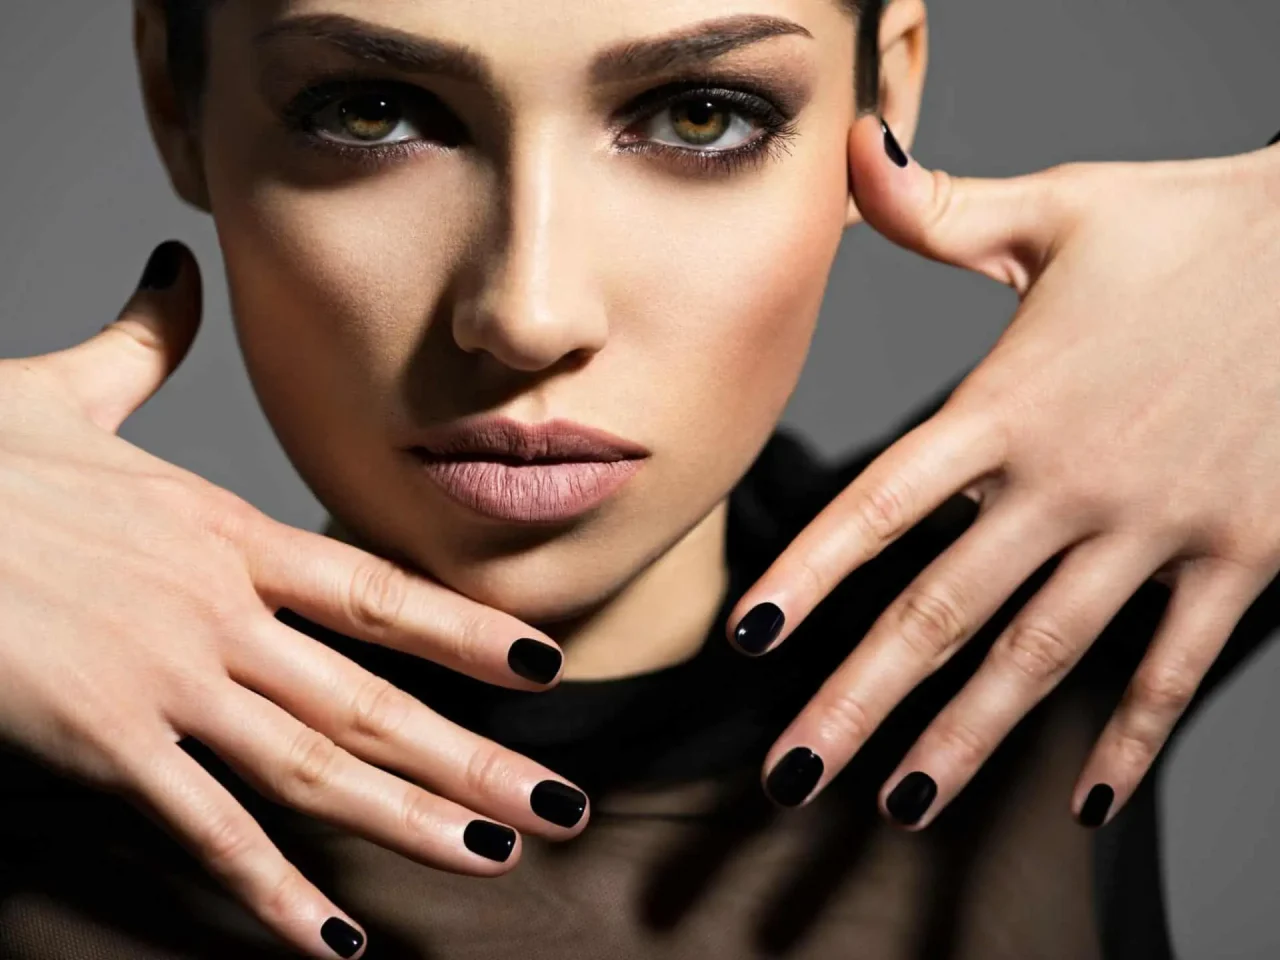 What does black nail polish symbolize?